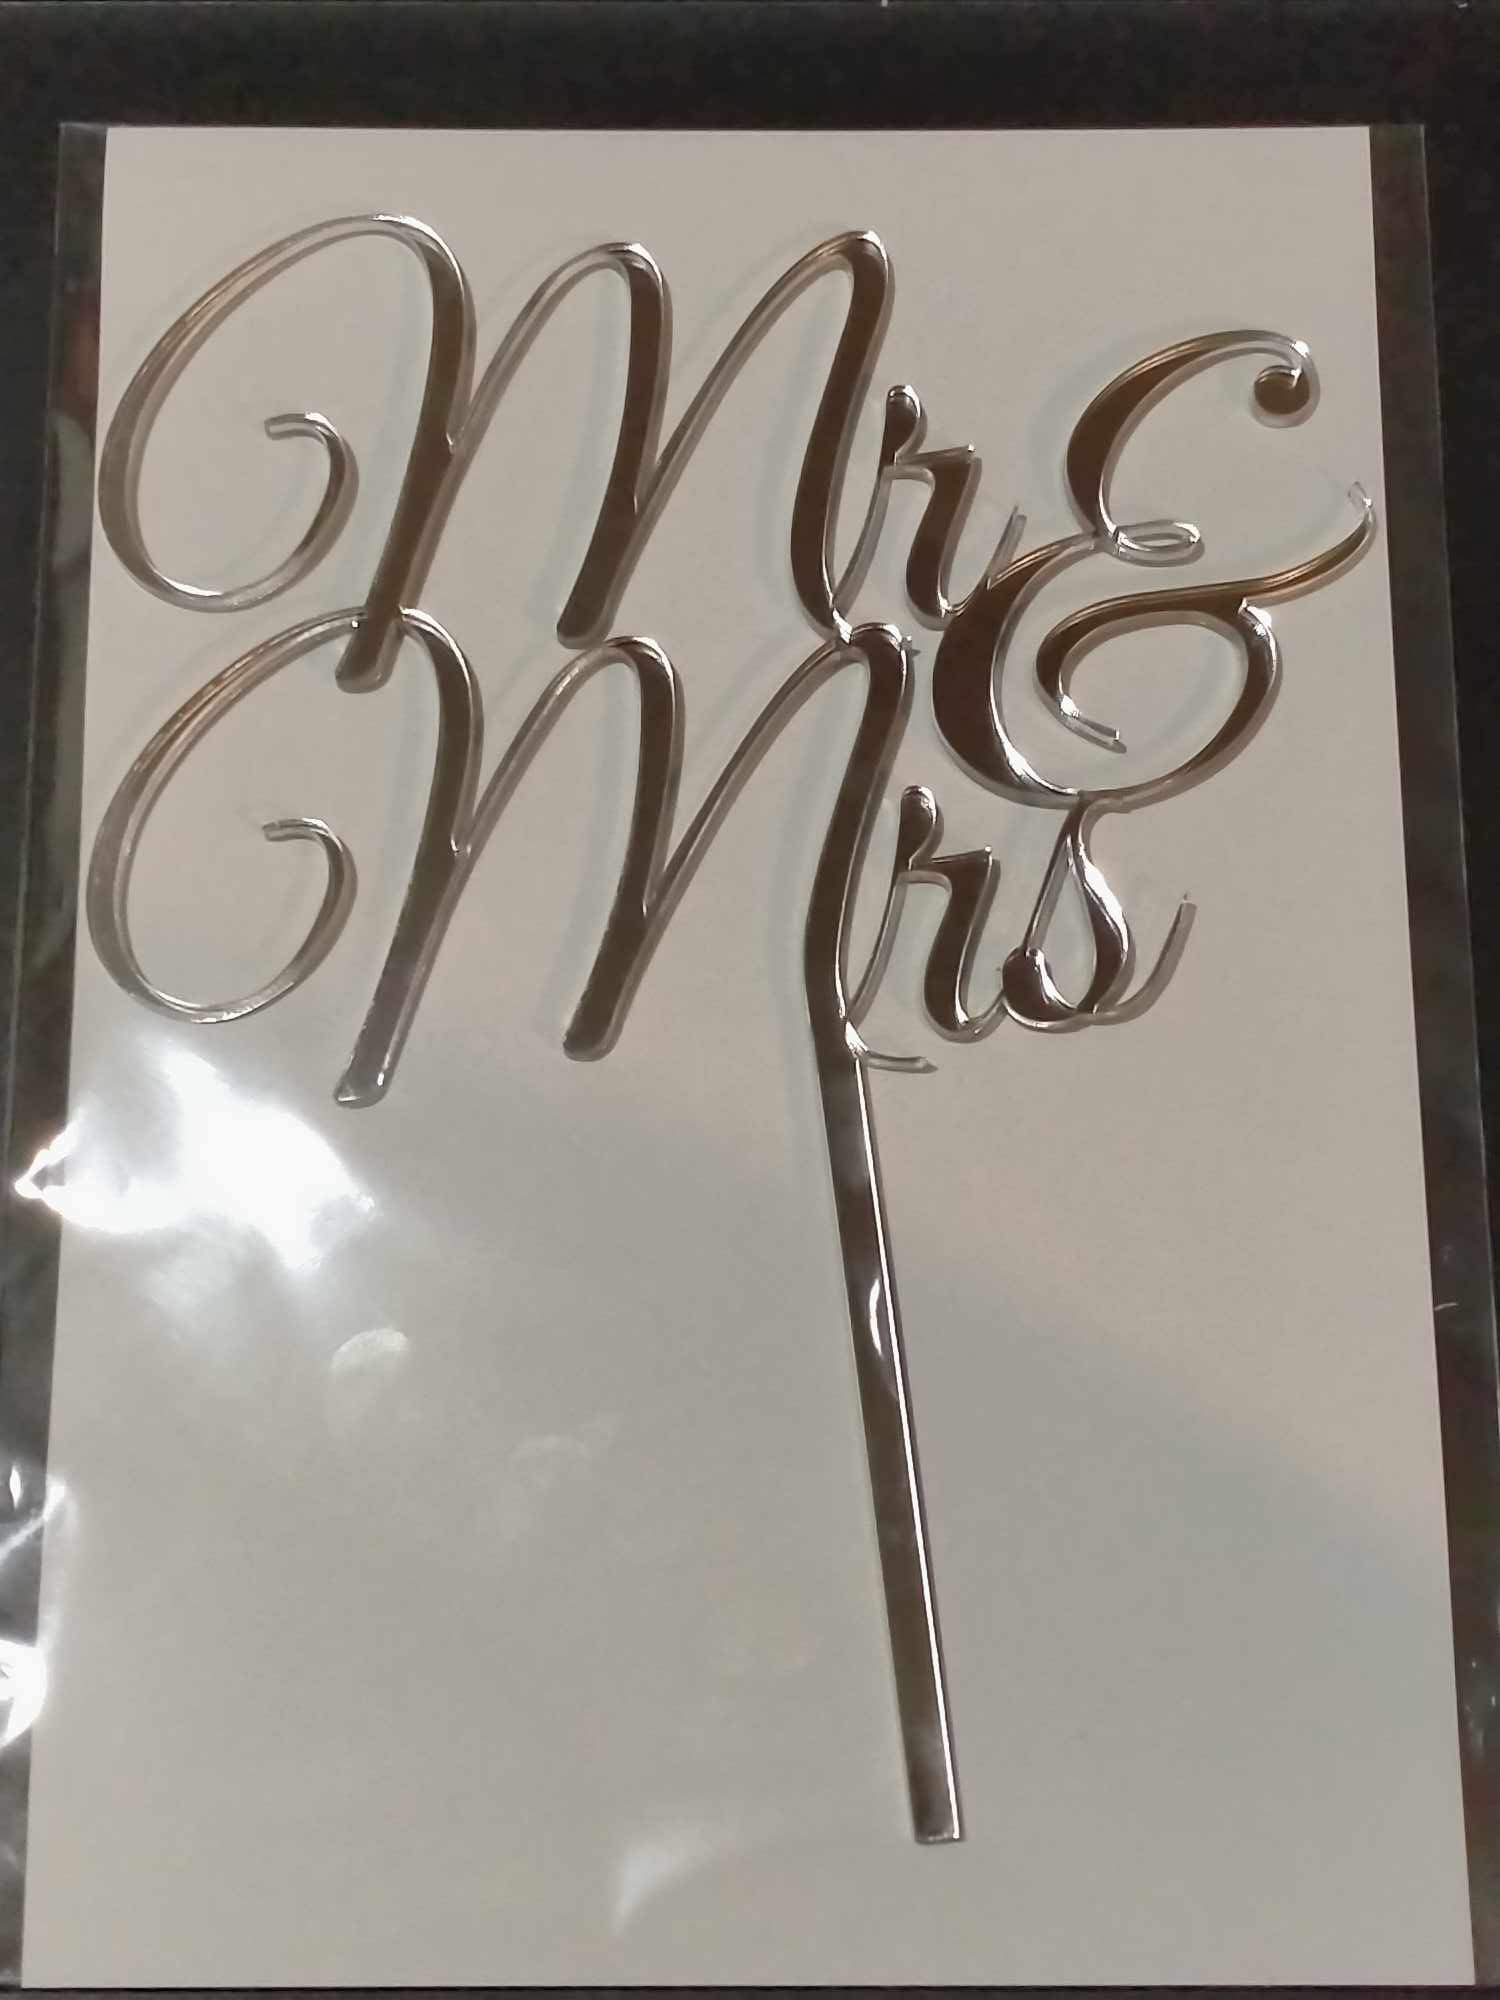 Mr&Mrs - Script font - cake topper